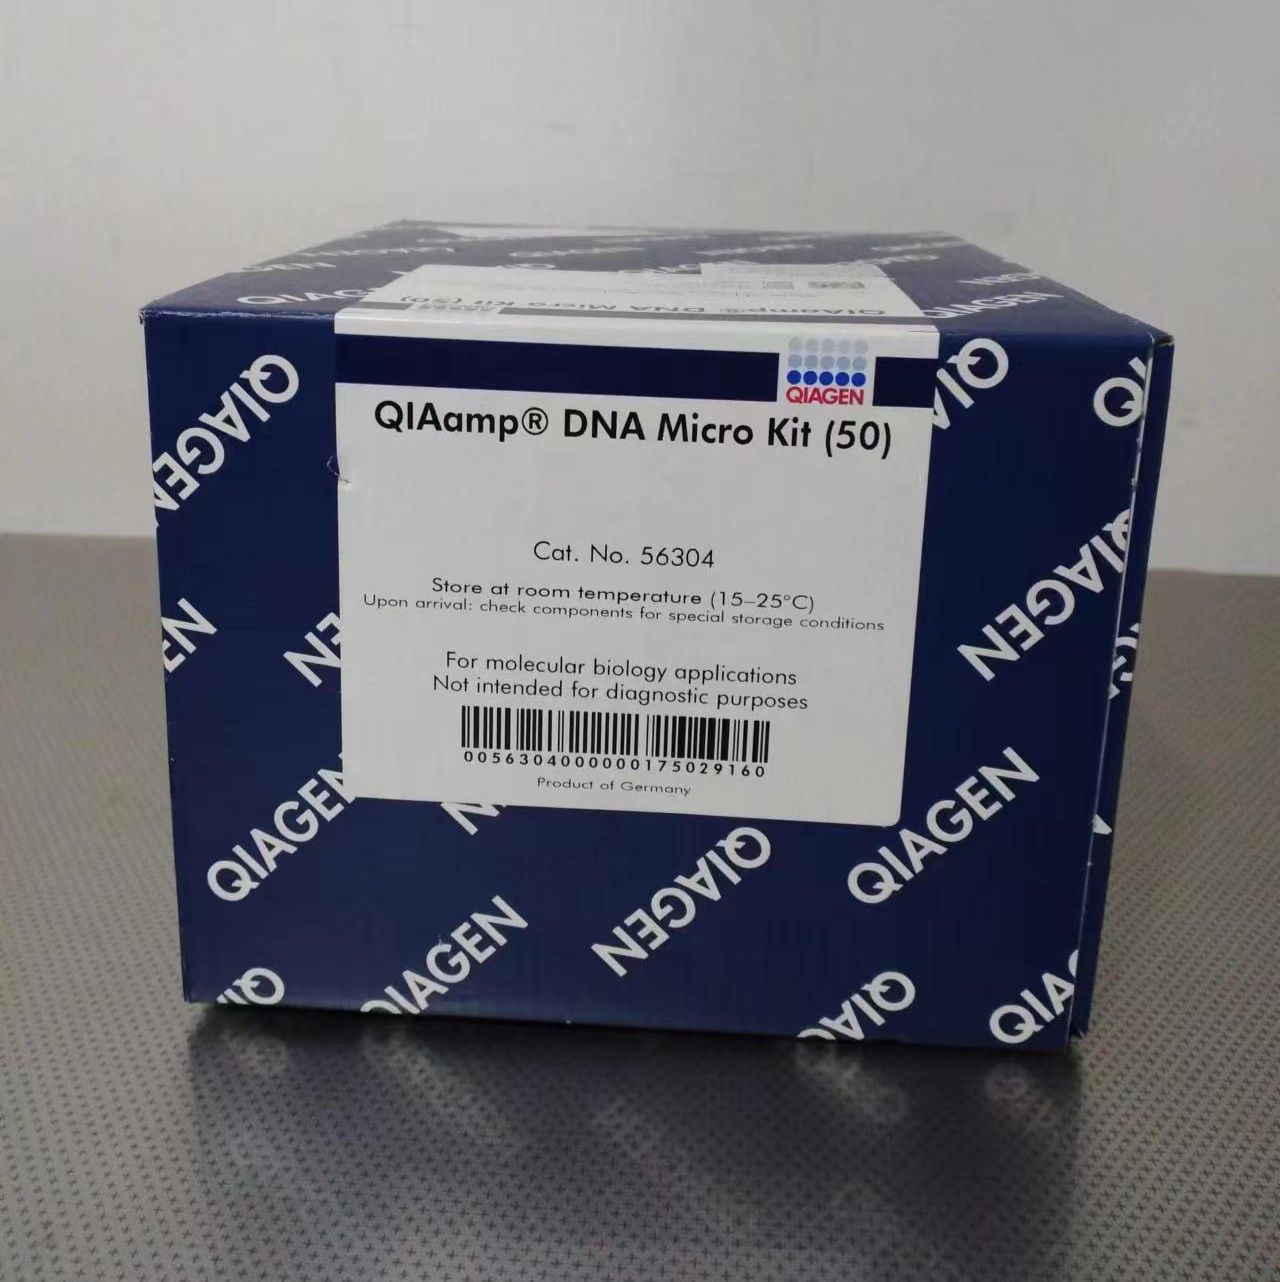 凯杰优秀代理商 QIAGEN 56304 QIAamp DNA Micro Kit (50) 微量DNA提取试剂盒